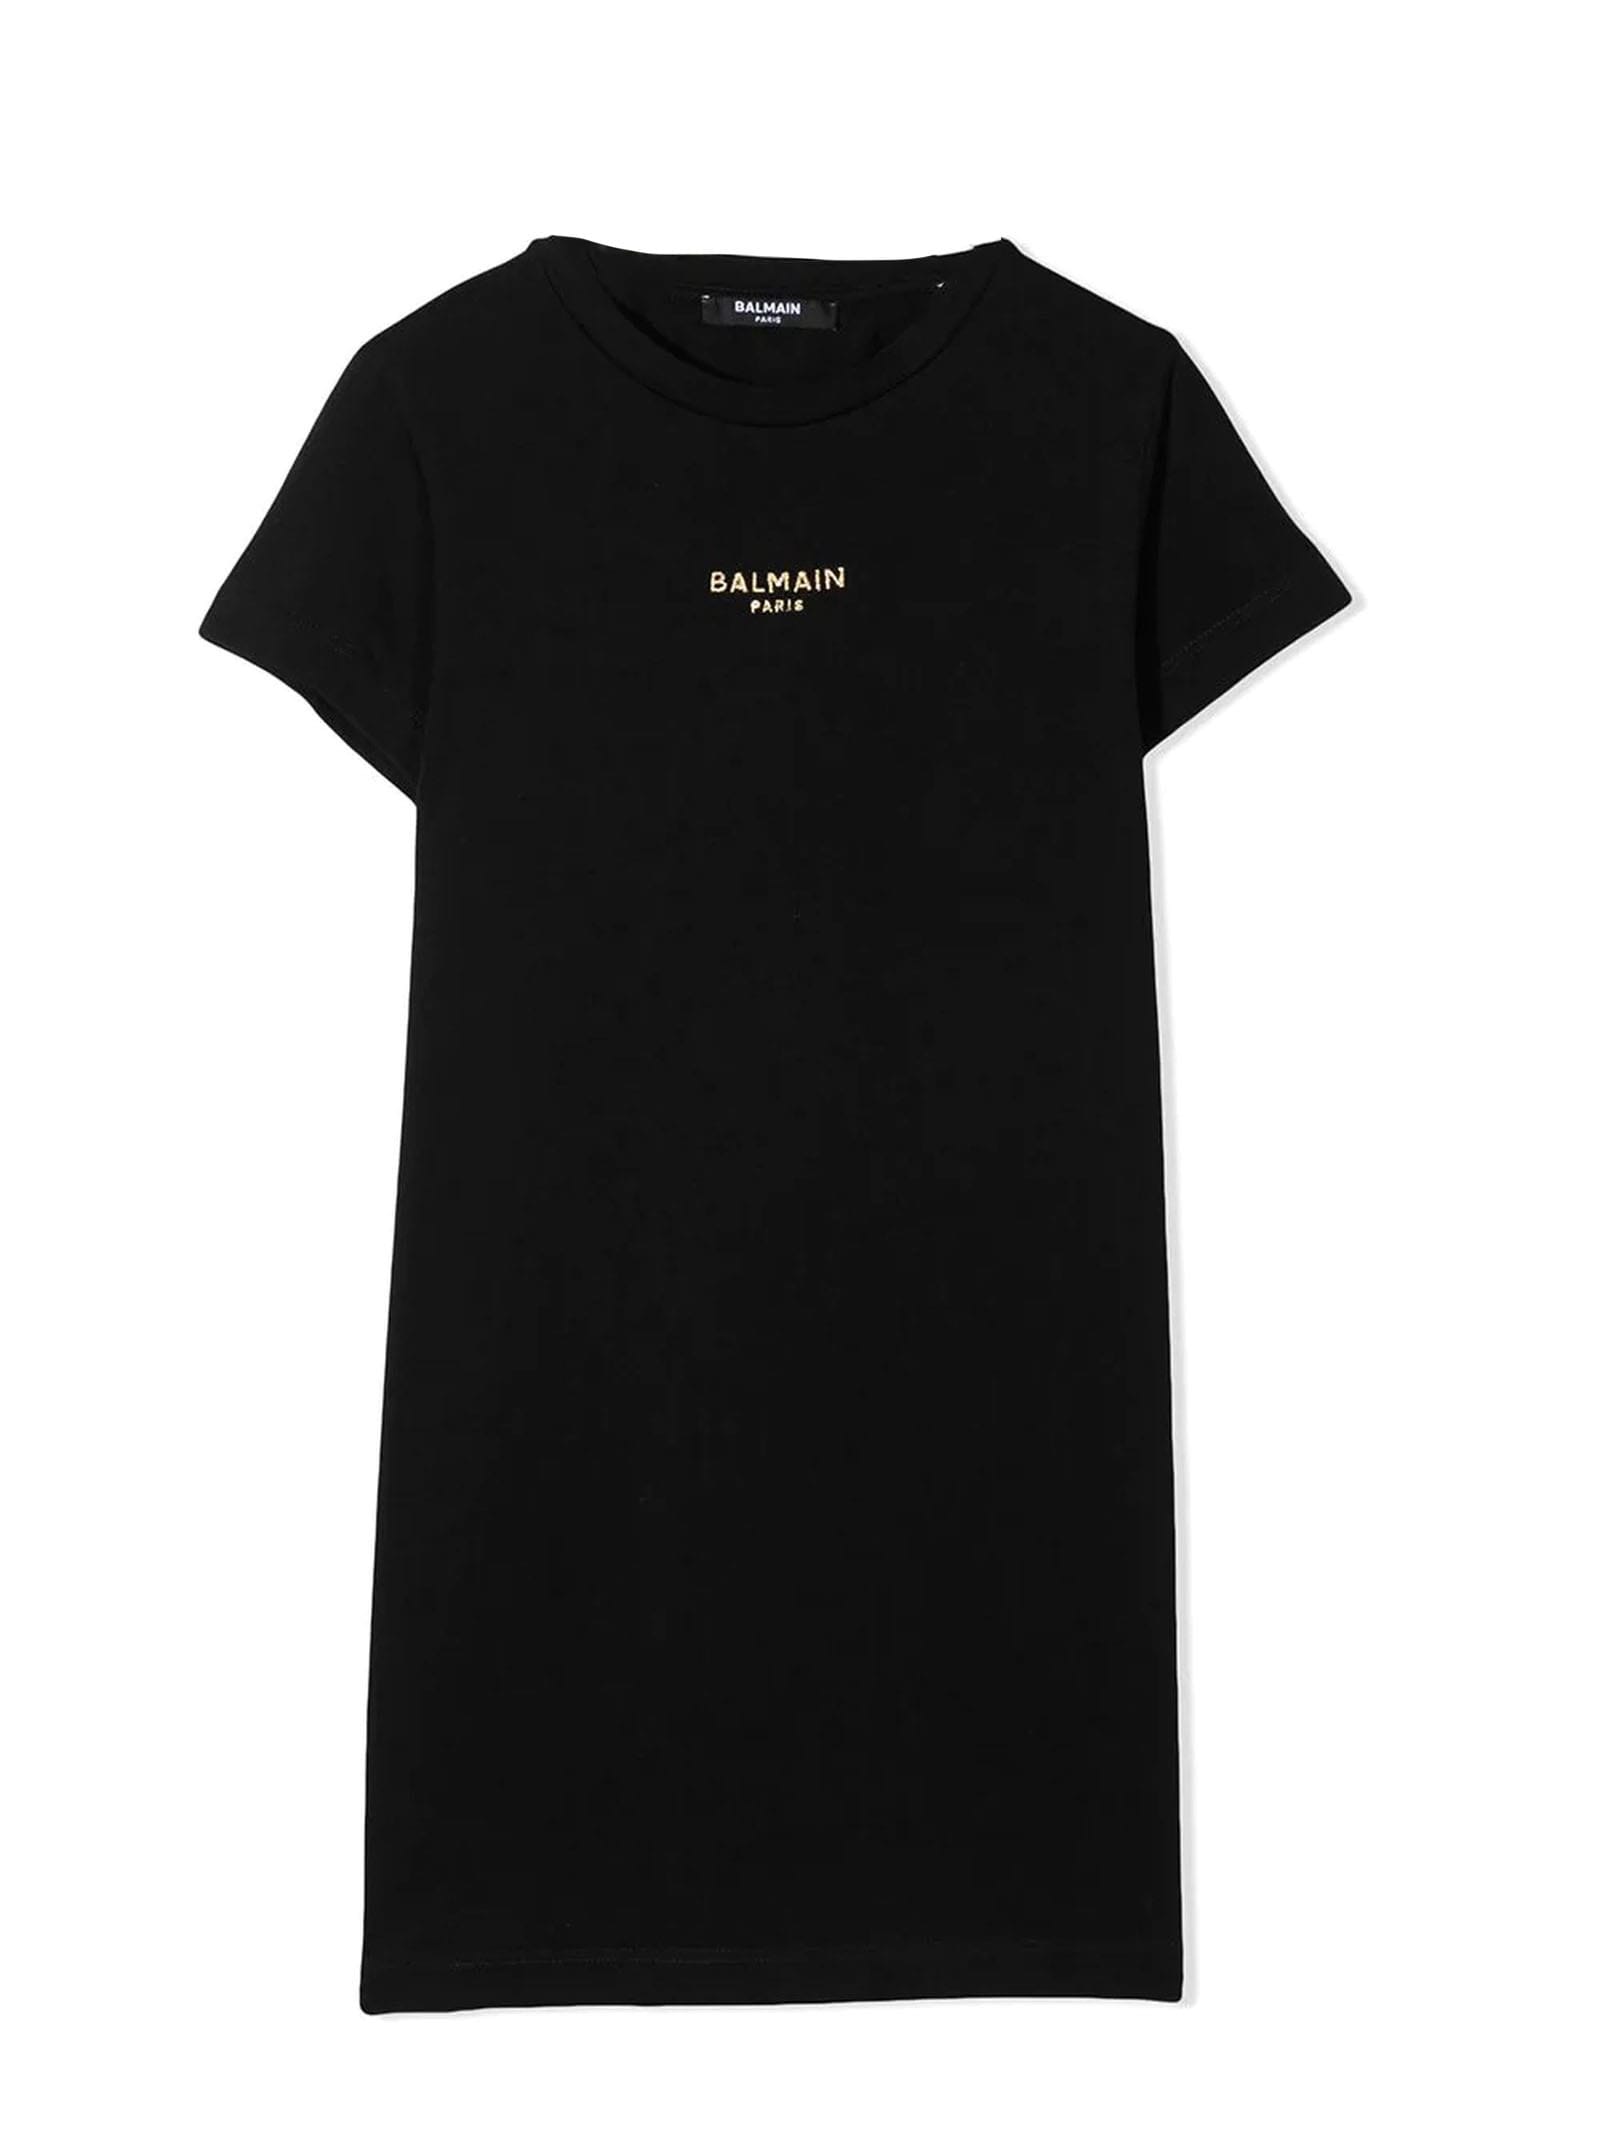 Balmain Black Cotton T-shirt Dress